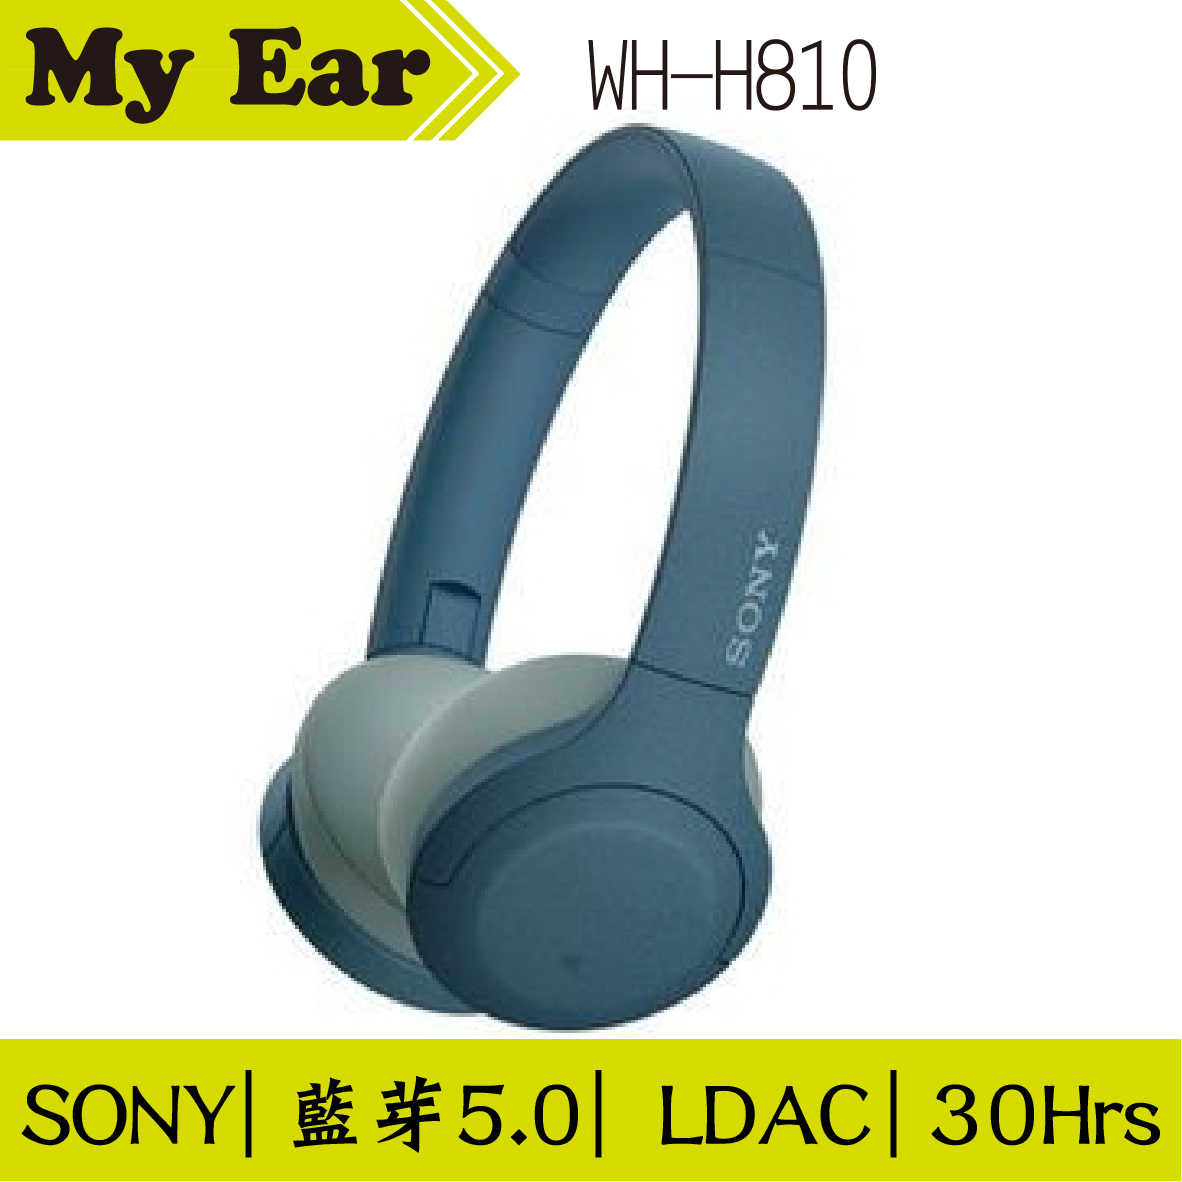 SONY WH-H810 h.ear 藍芽 耳罩式 耳機 藍色 | My Ear 耳機專門店